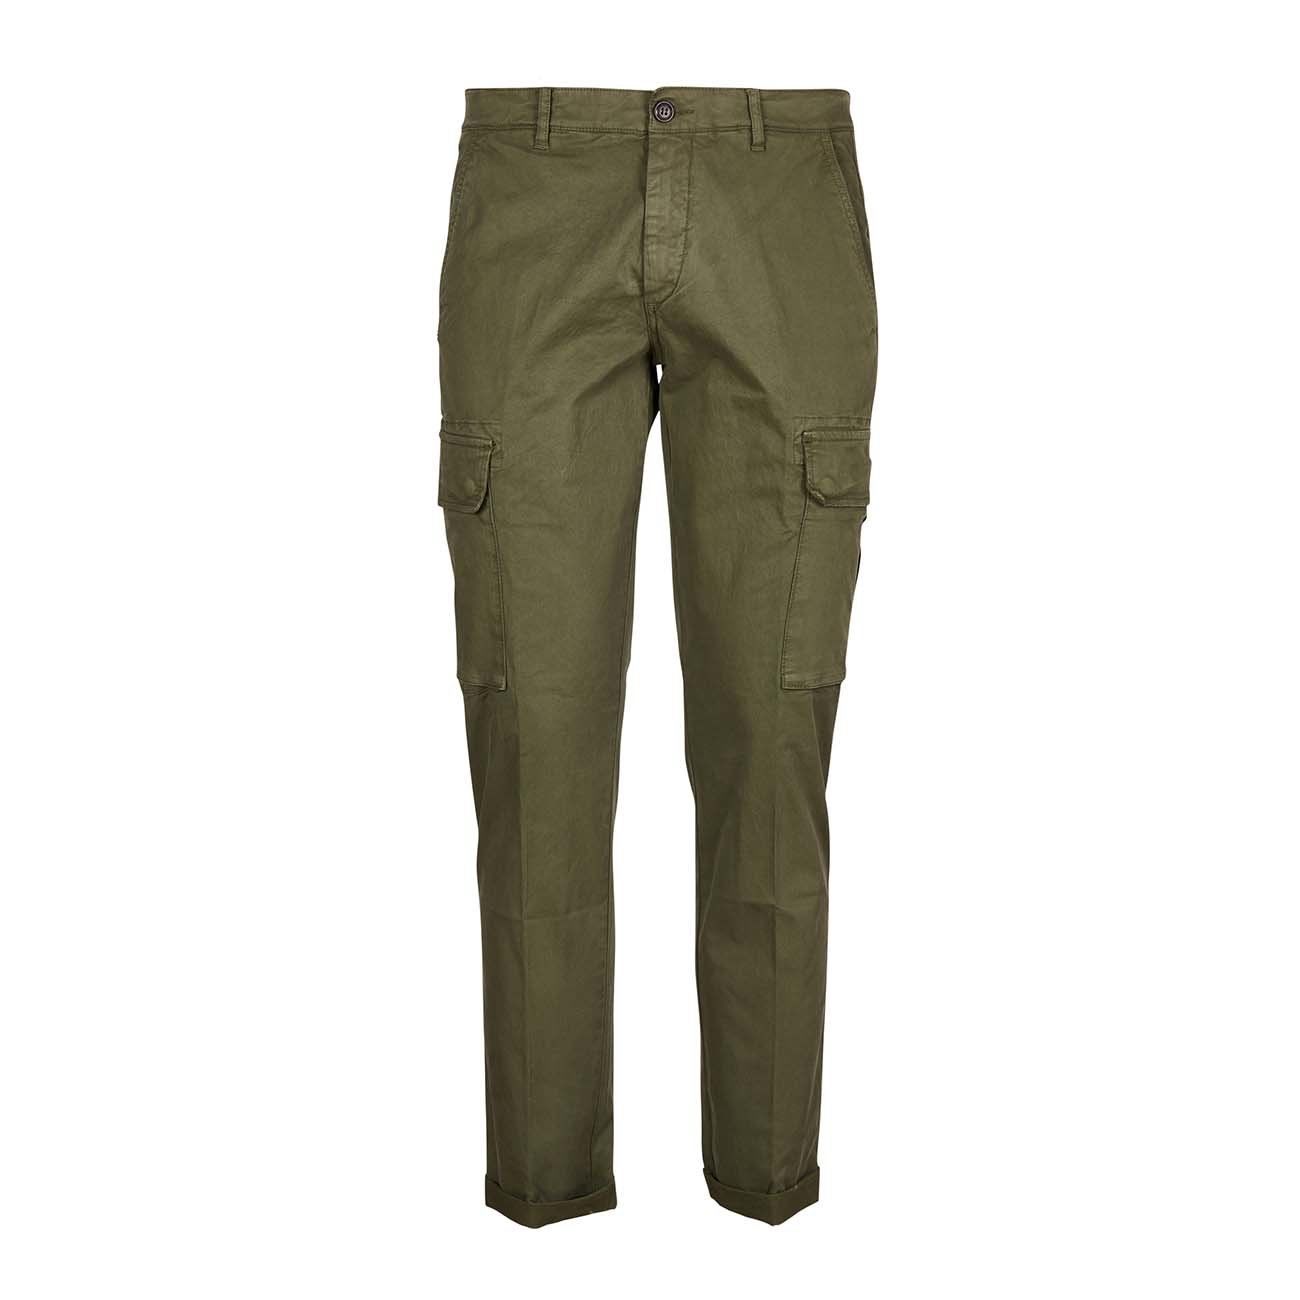 Army Pants for Men for sale | eBay-cheohanoi.vn